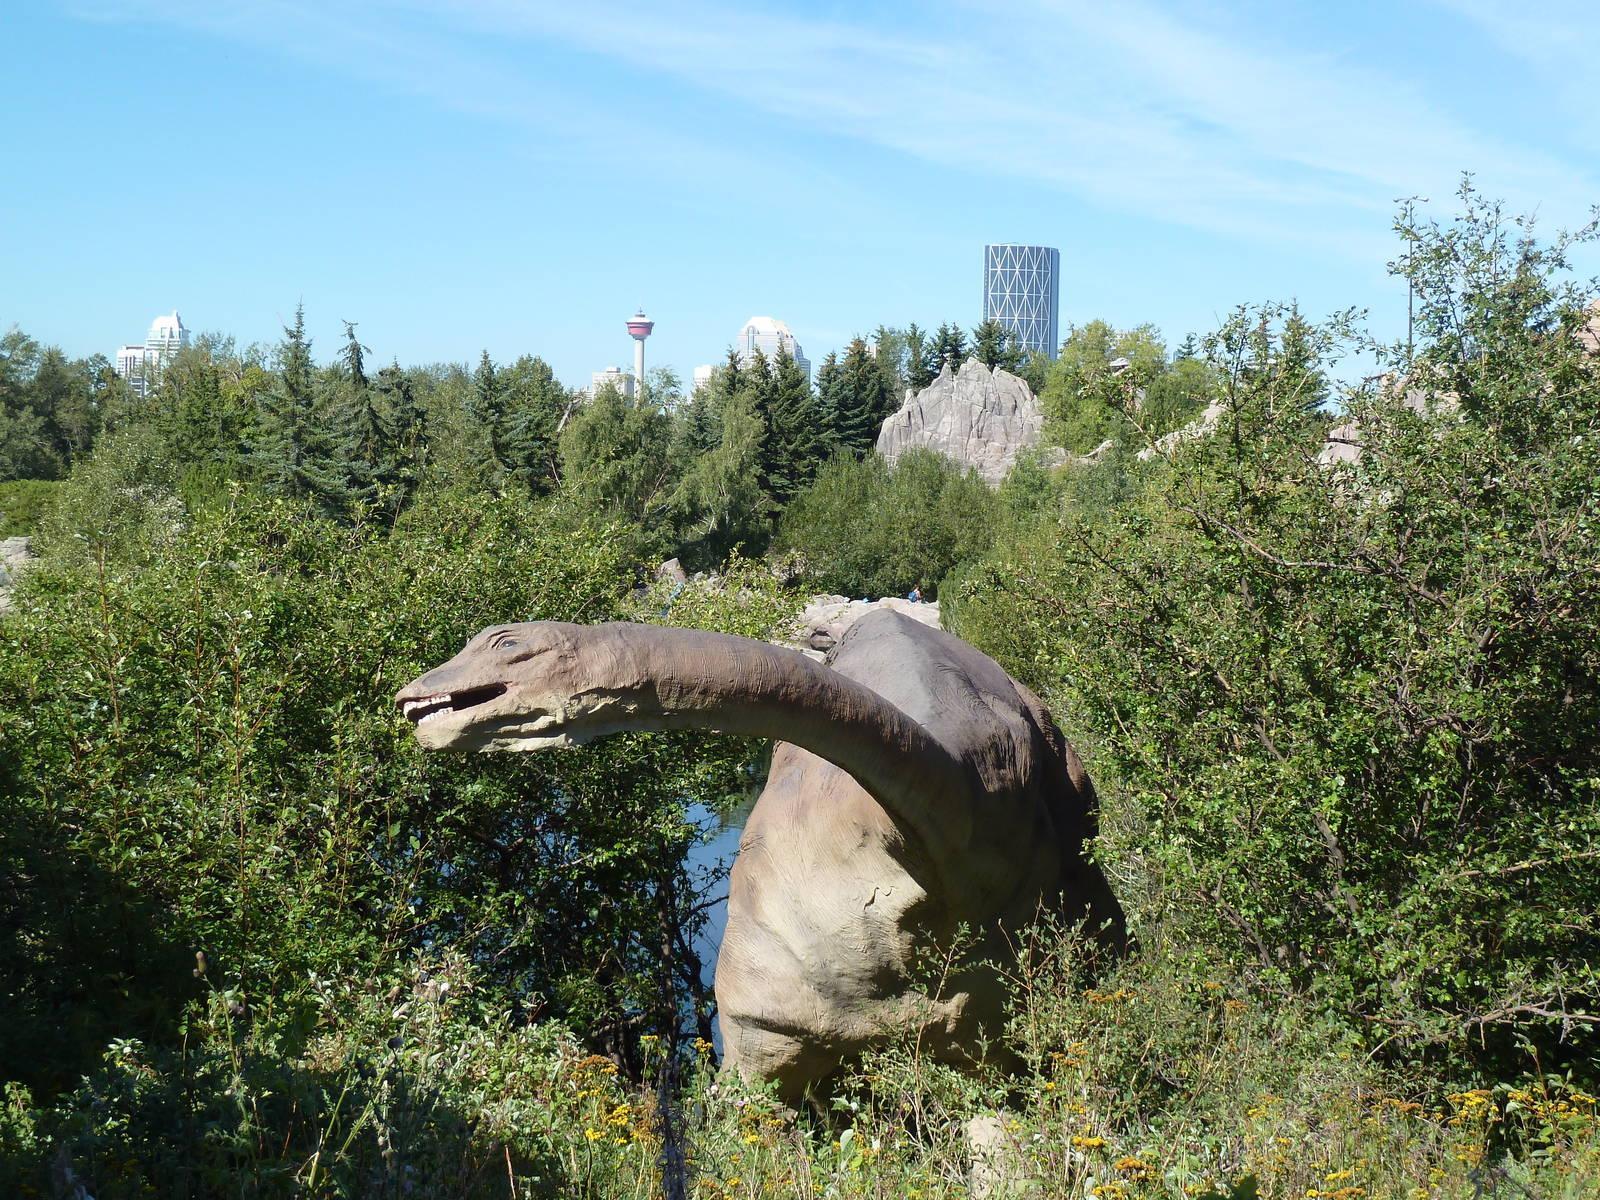 Prehistoric Park + Calgary Tower in background